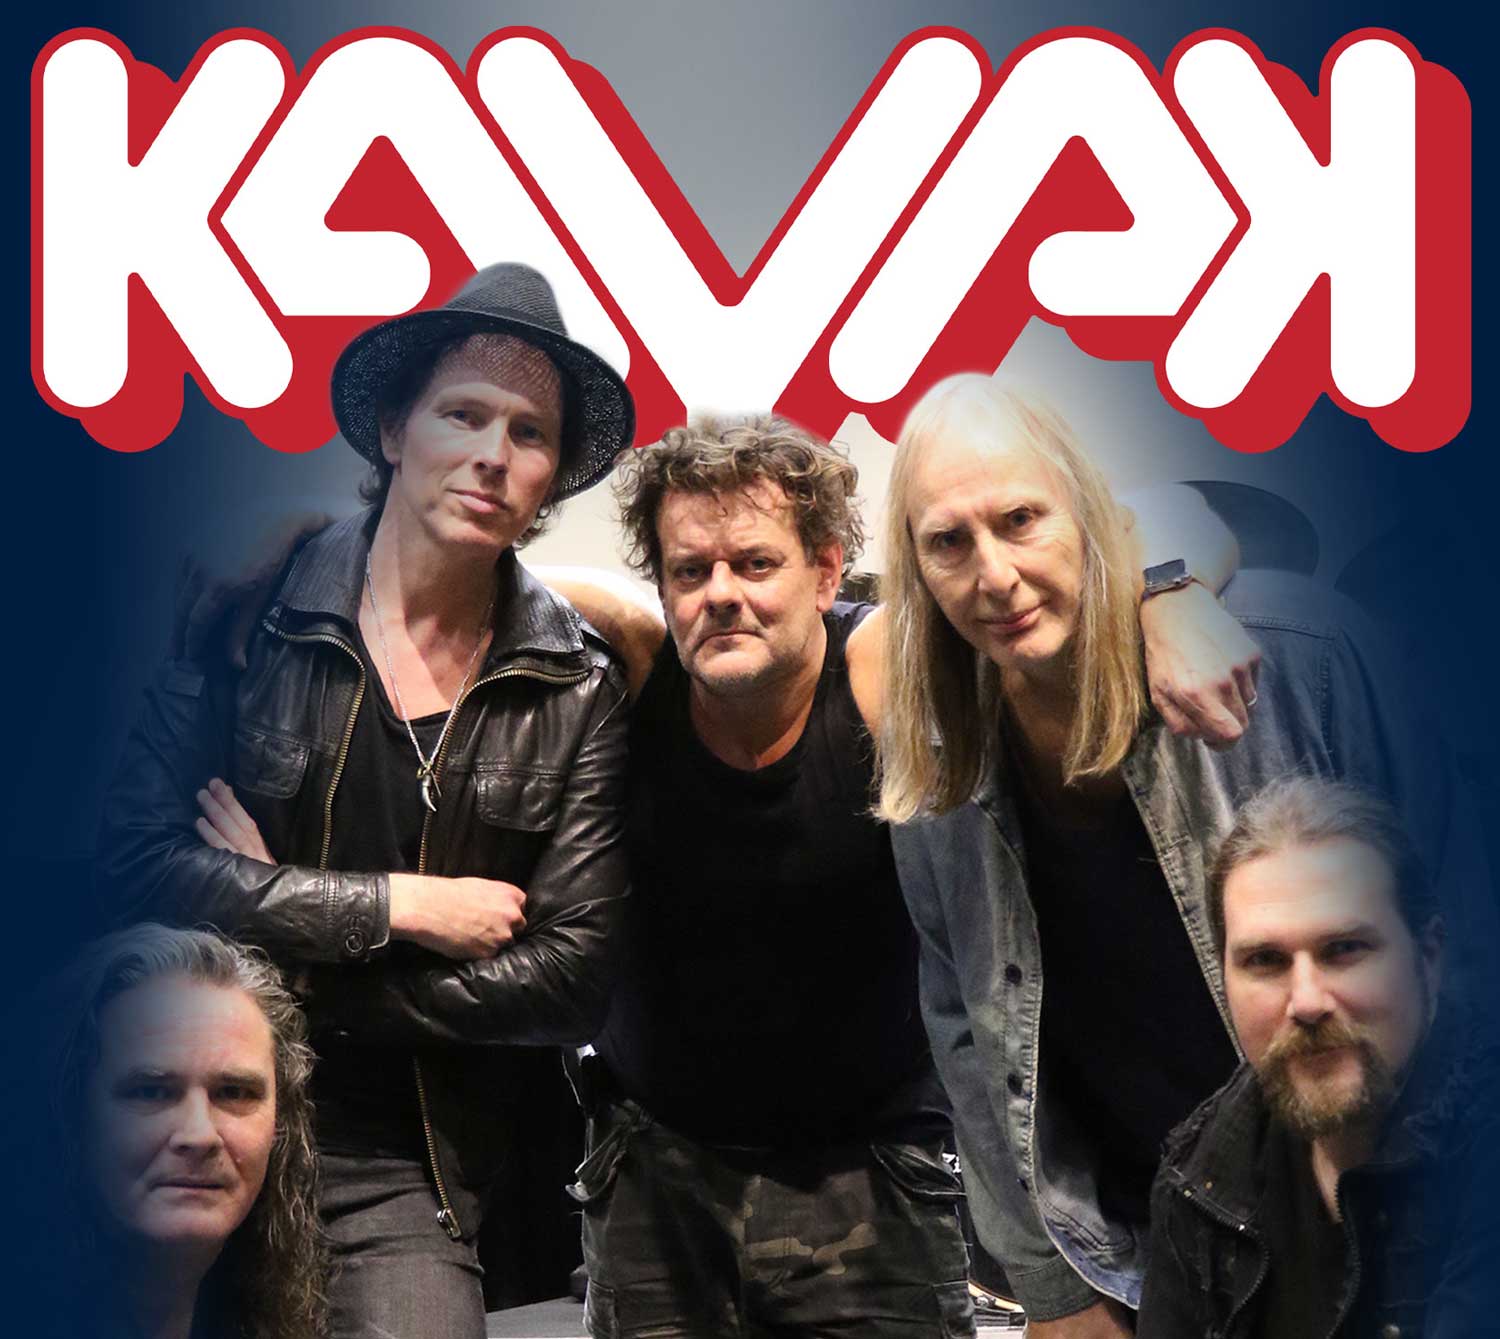 Kayak - Live 2019 - Promo Card